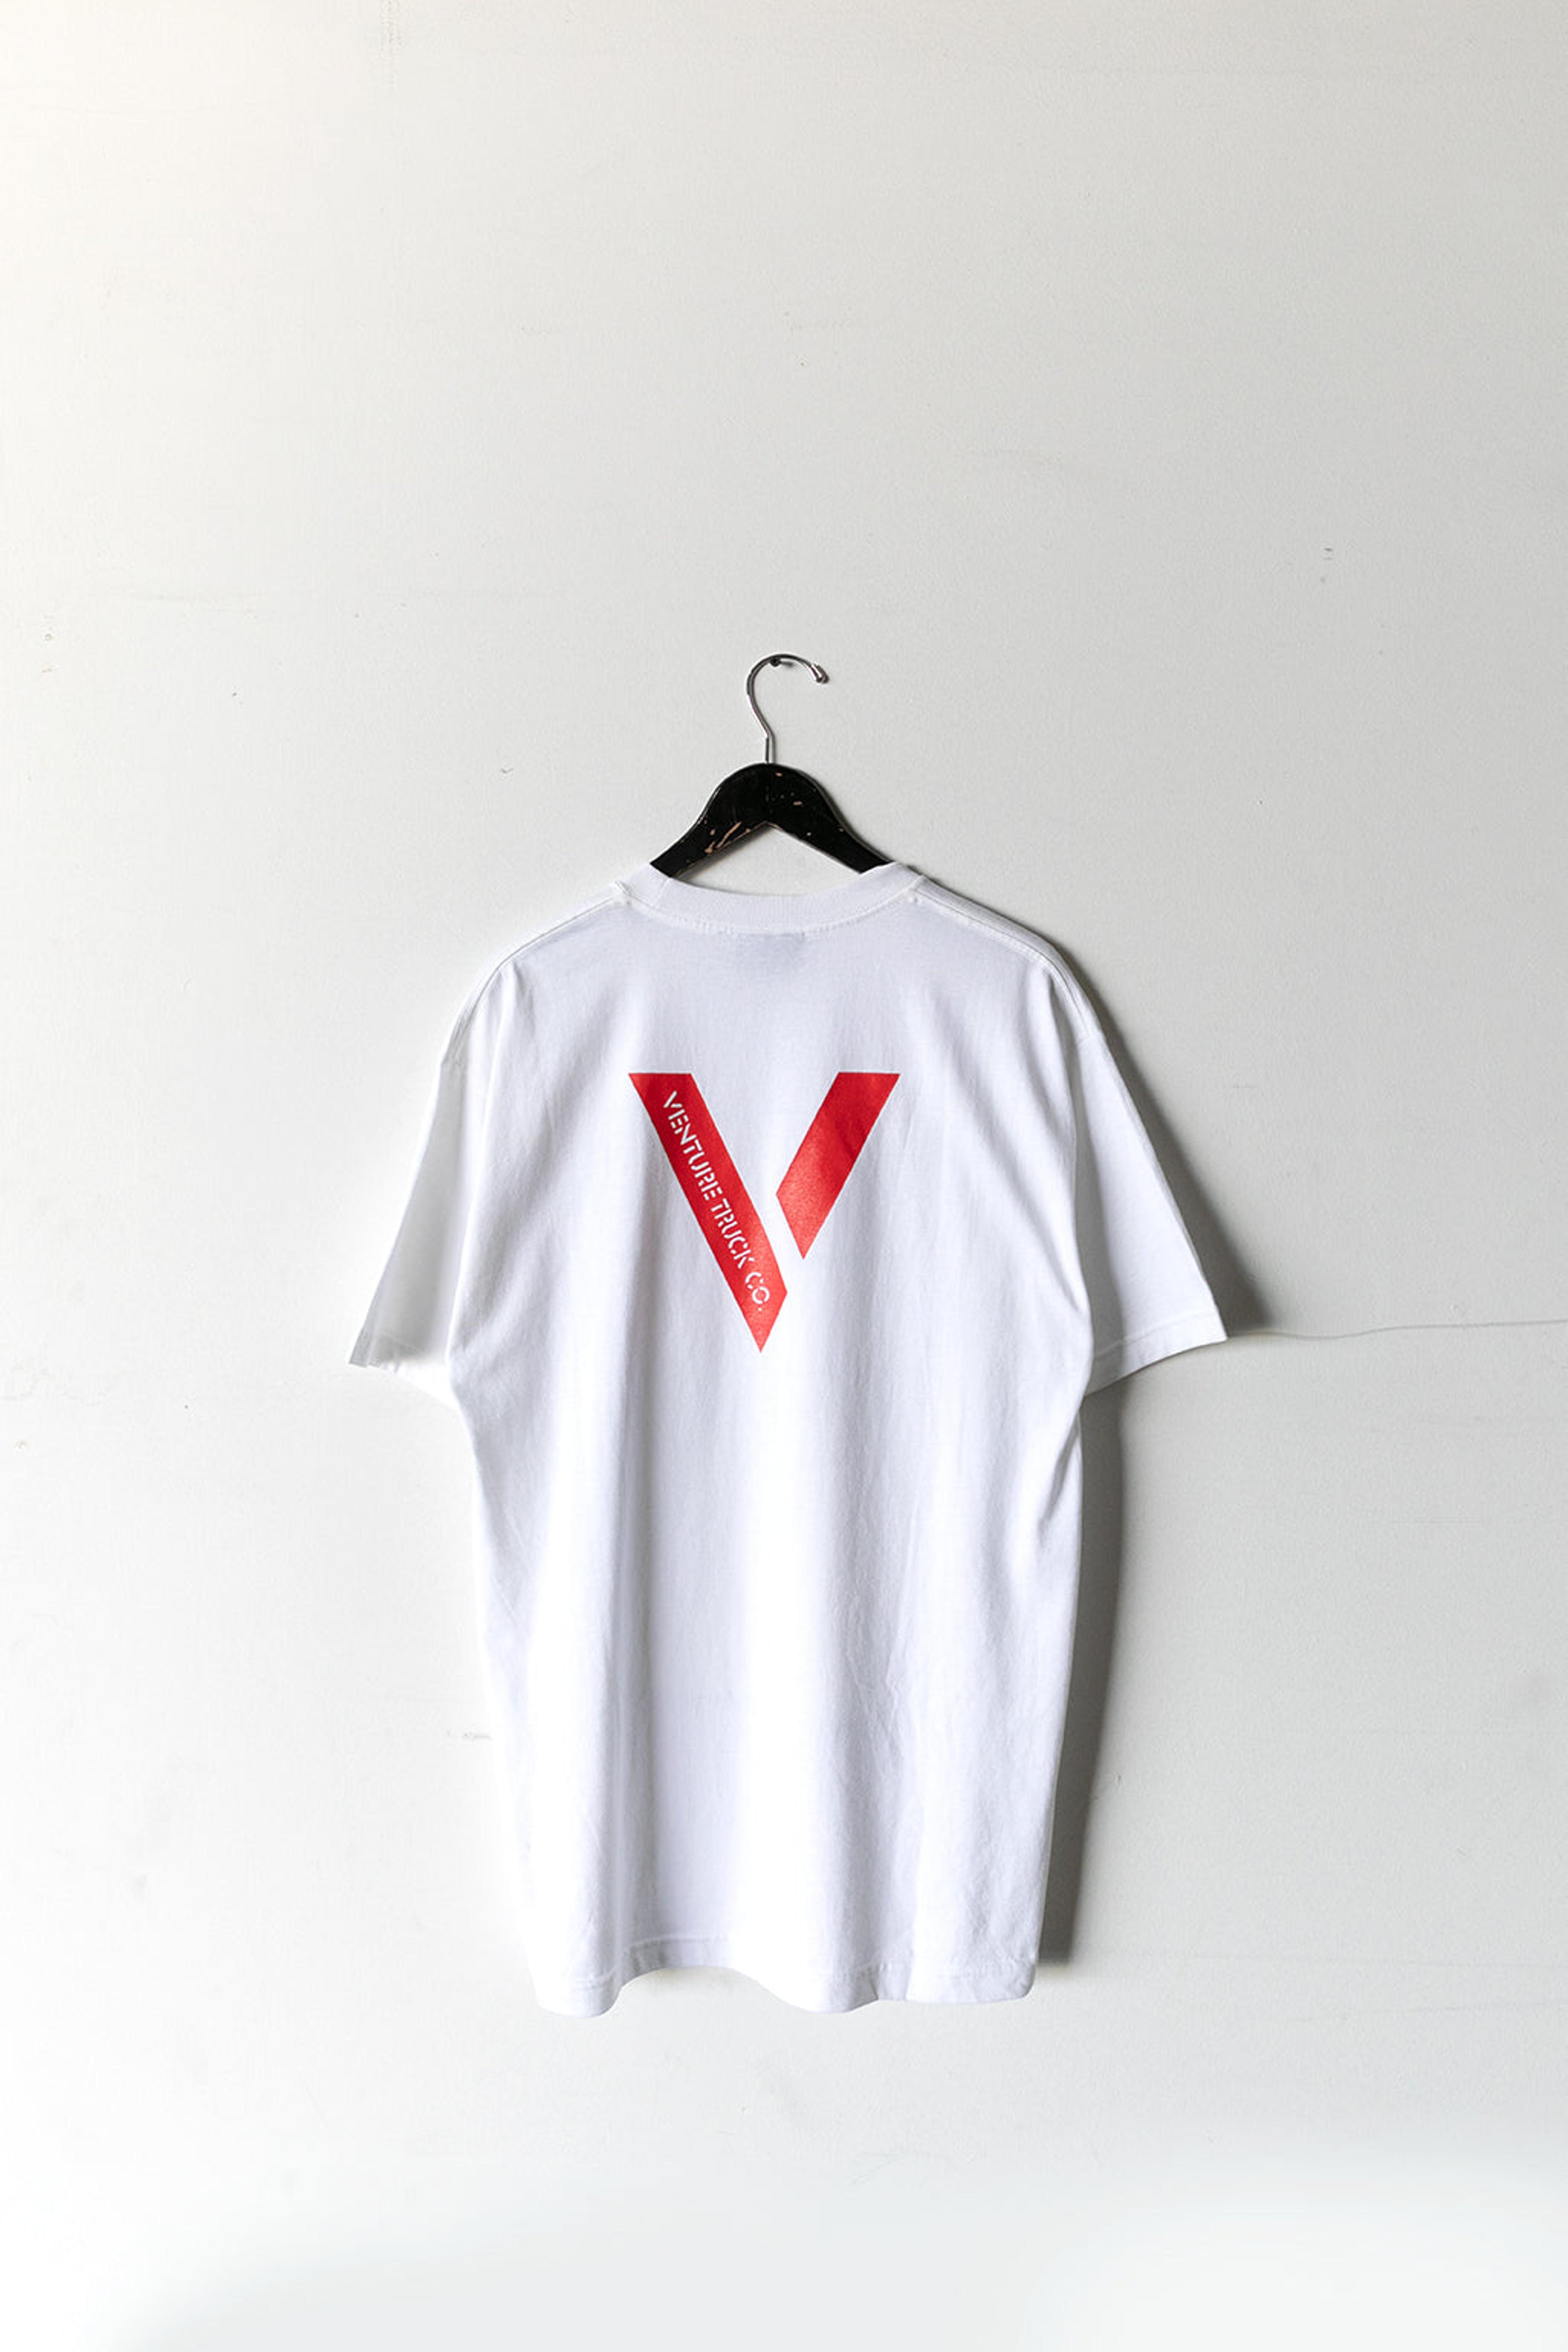 Alternate View 2 of Venture T-Shirt